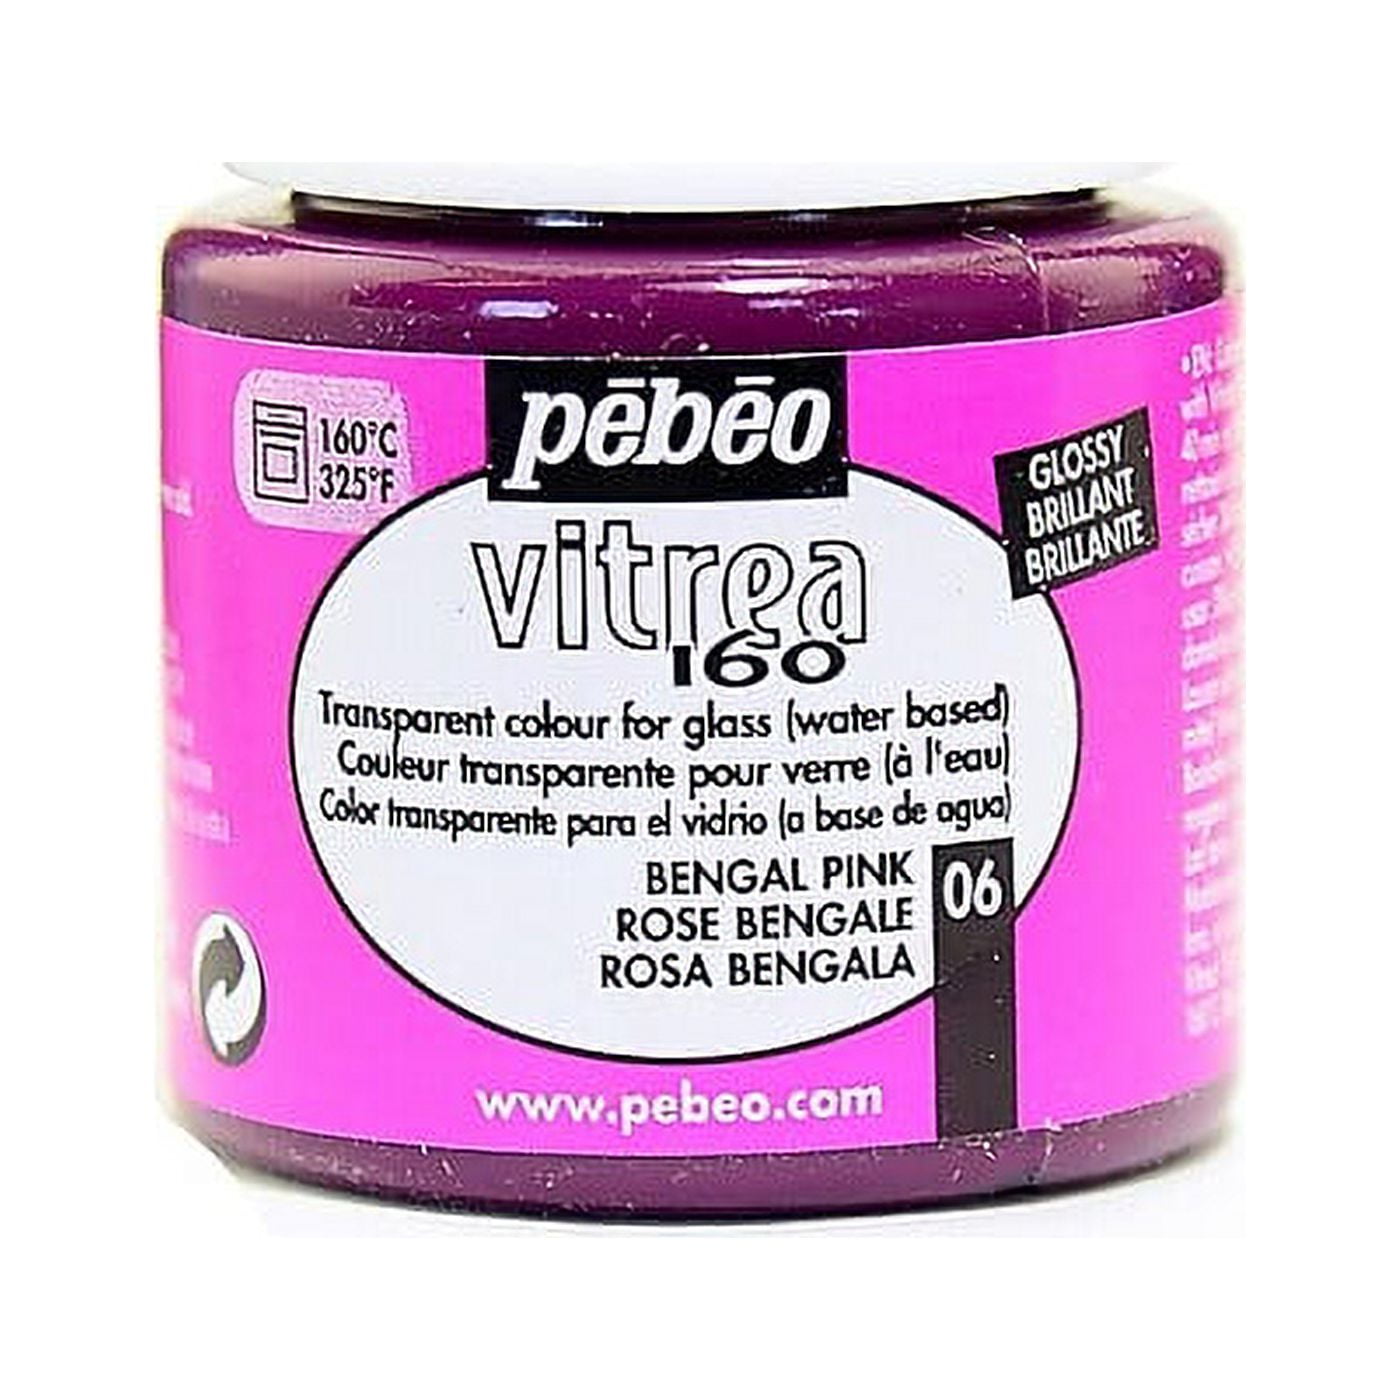 Pebeo Vitrea 160 Glass Paint - Lacquer Blue, Glossy, 45 ml bottle